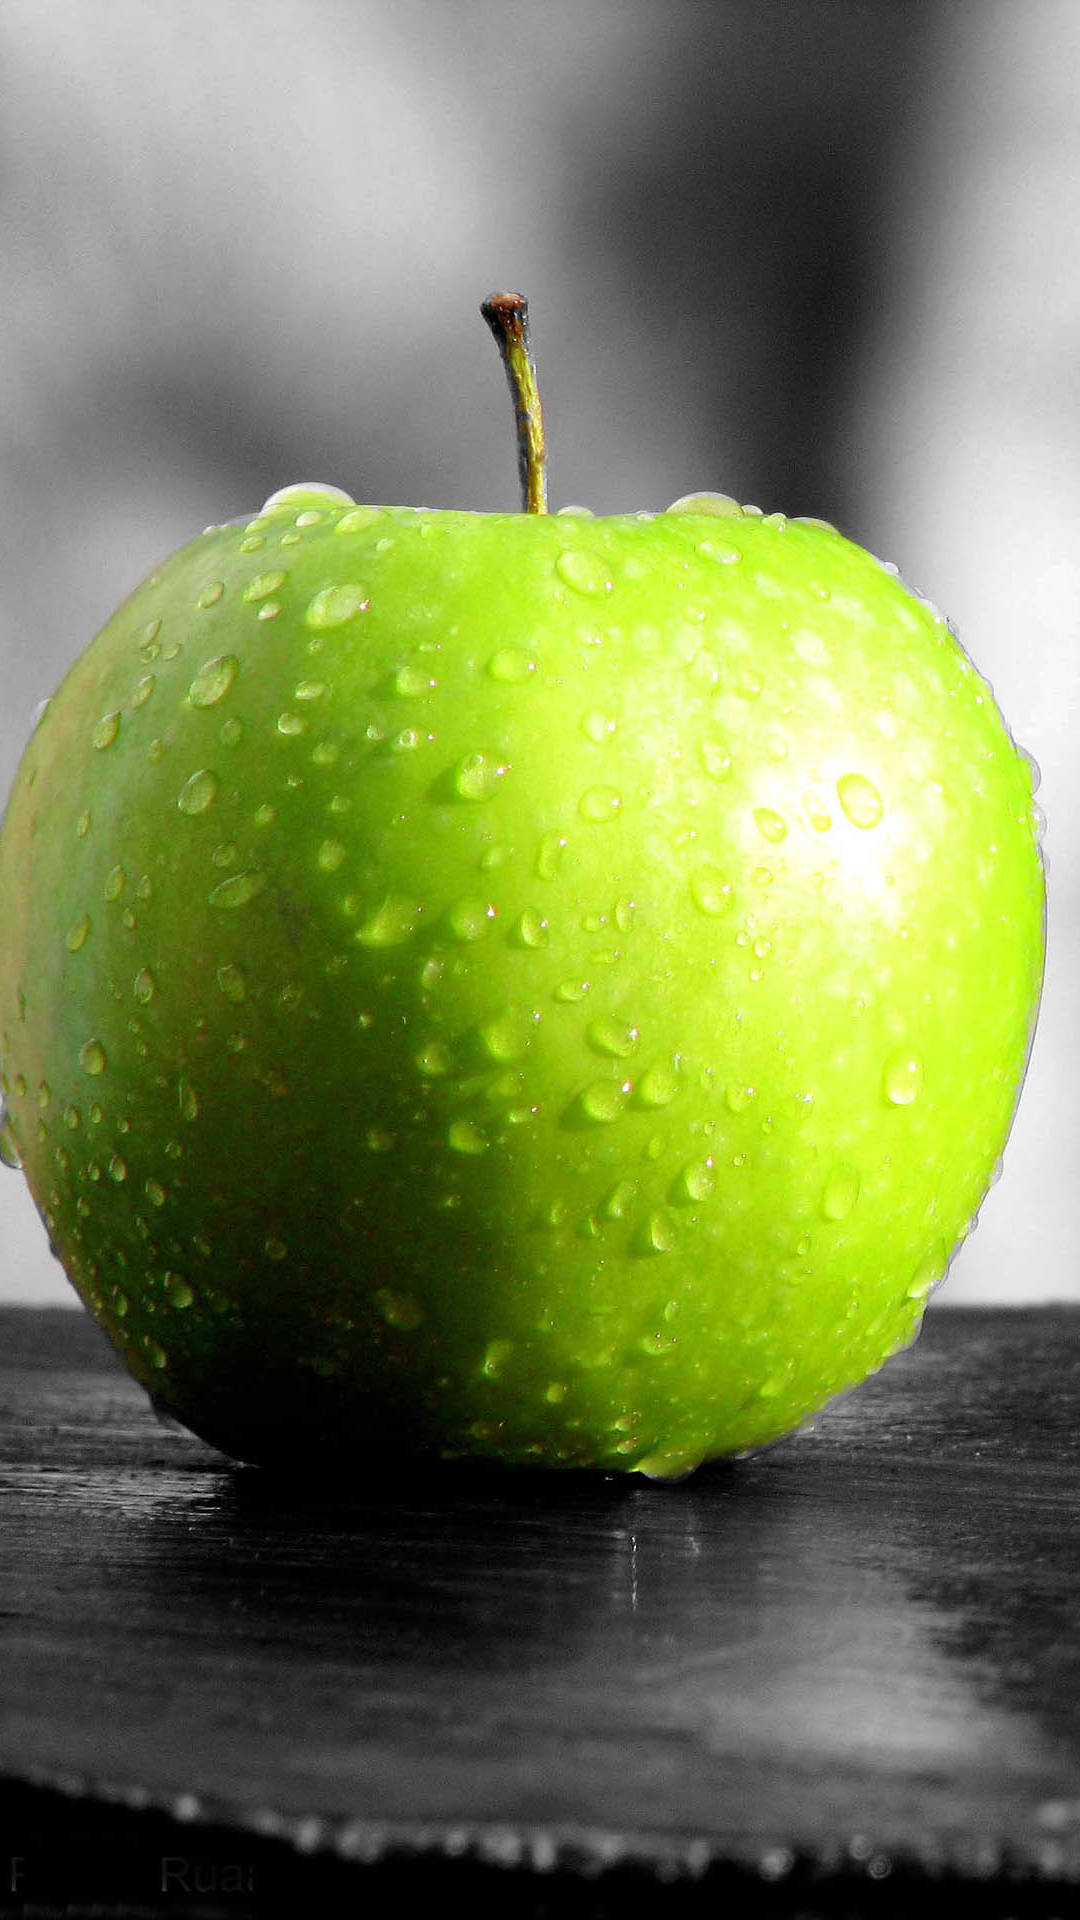 fond d'écran apple hd,granny smith,vert,pomme,aliments naturels,fruit